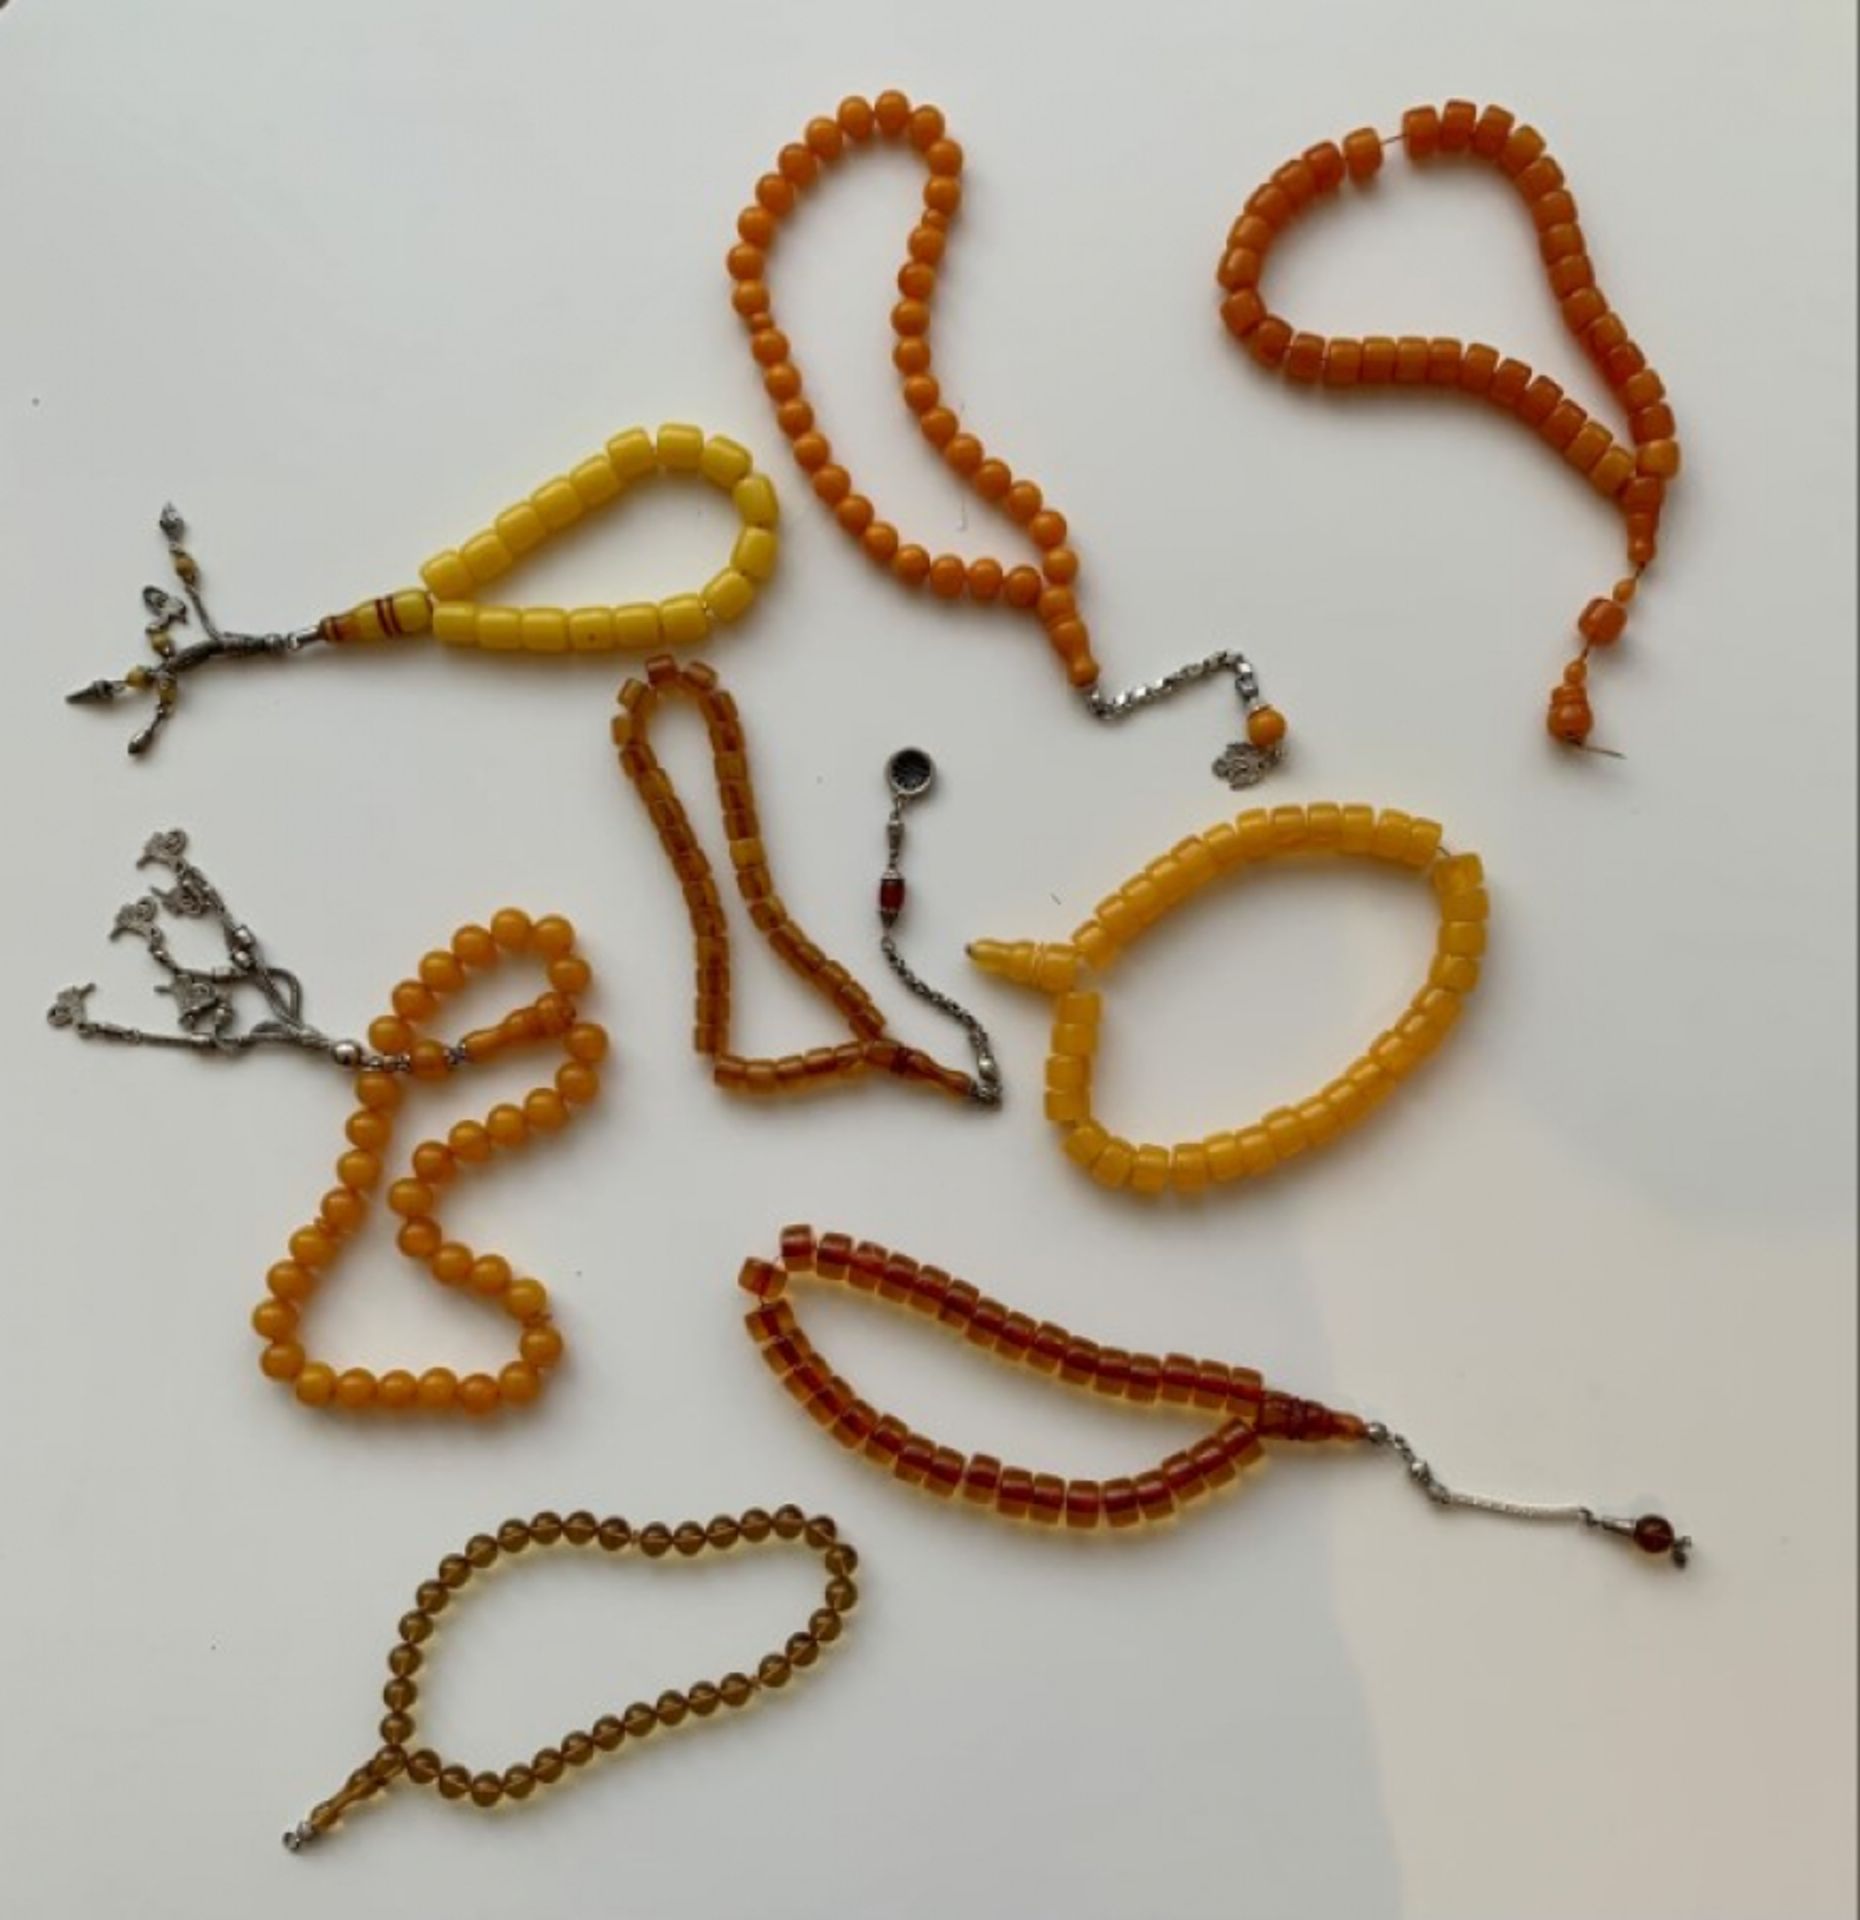 8 Bakelite Islamic Prayer Beads Rosaries (Tashbih) - Image 3 of 5